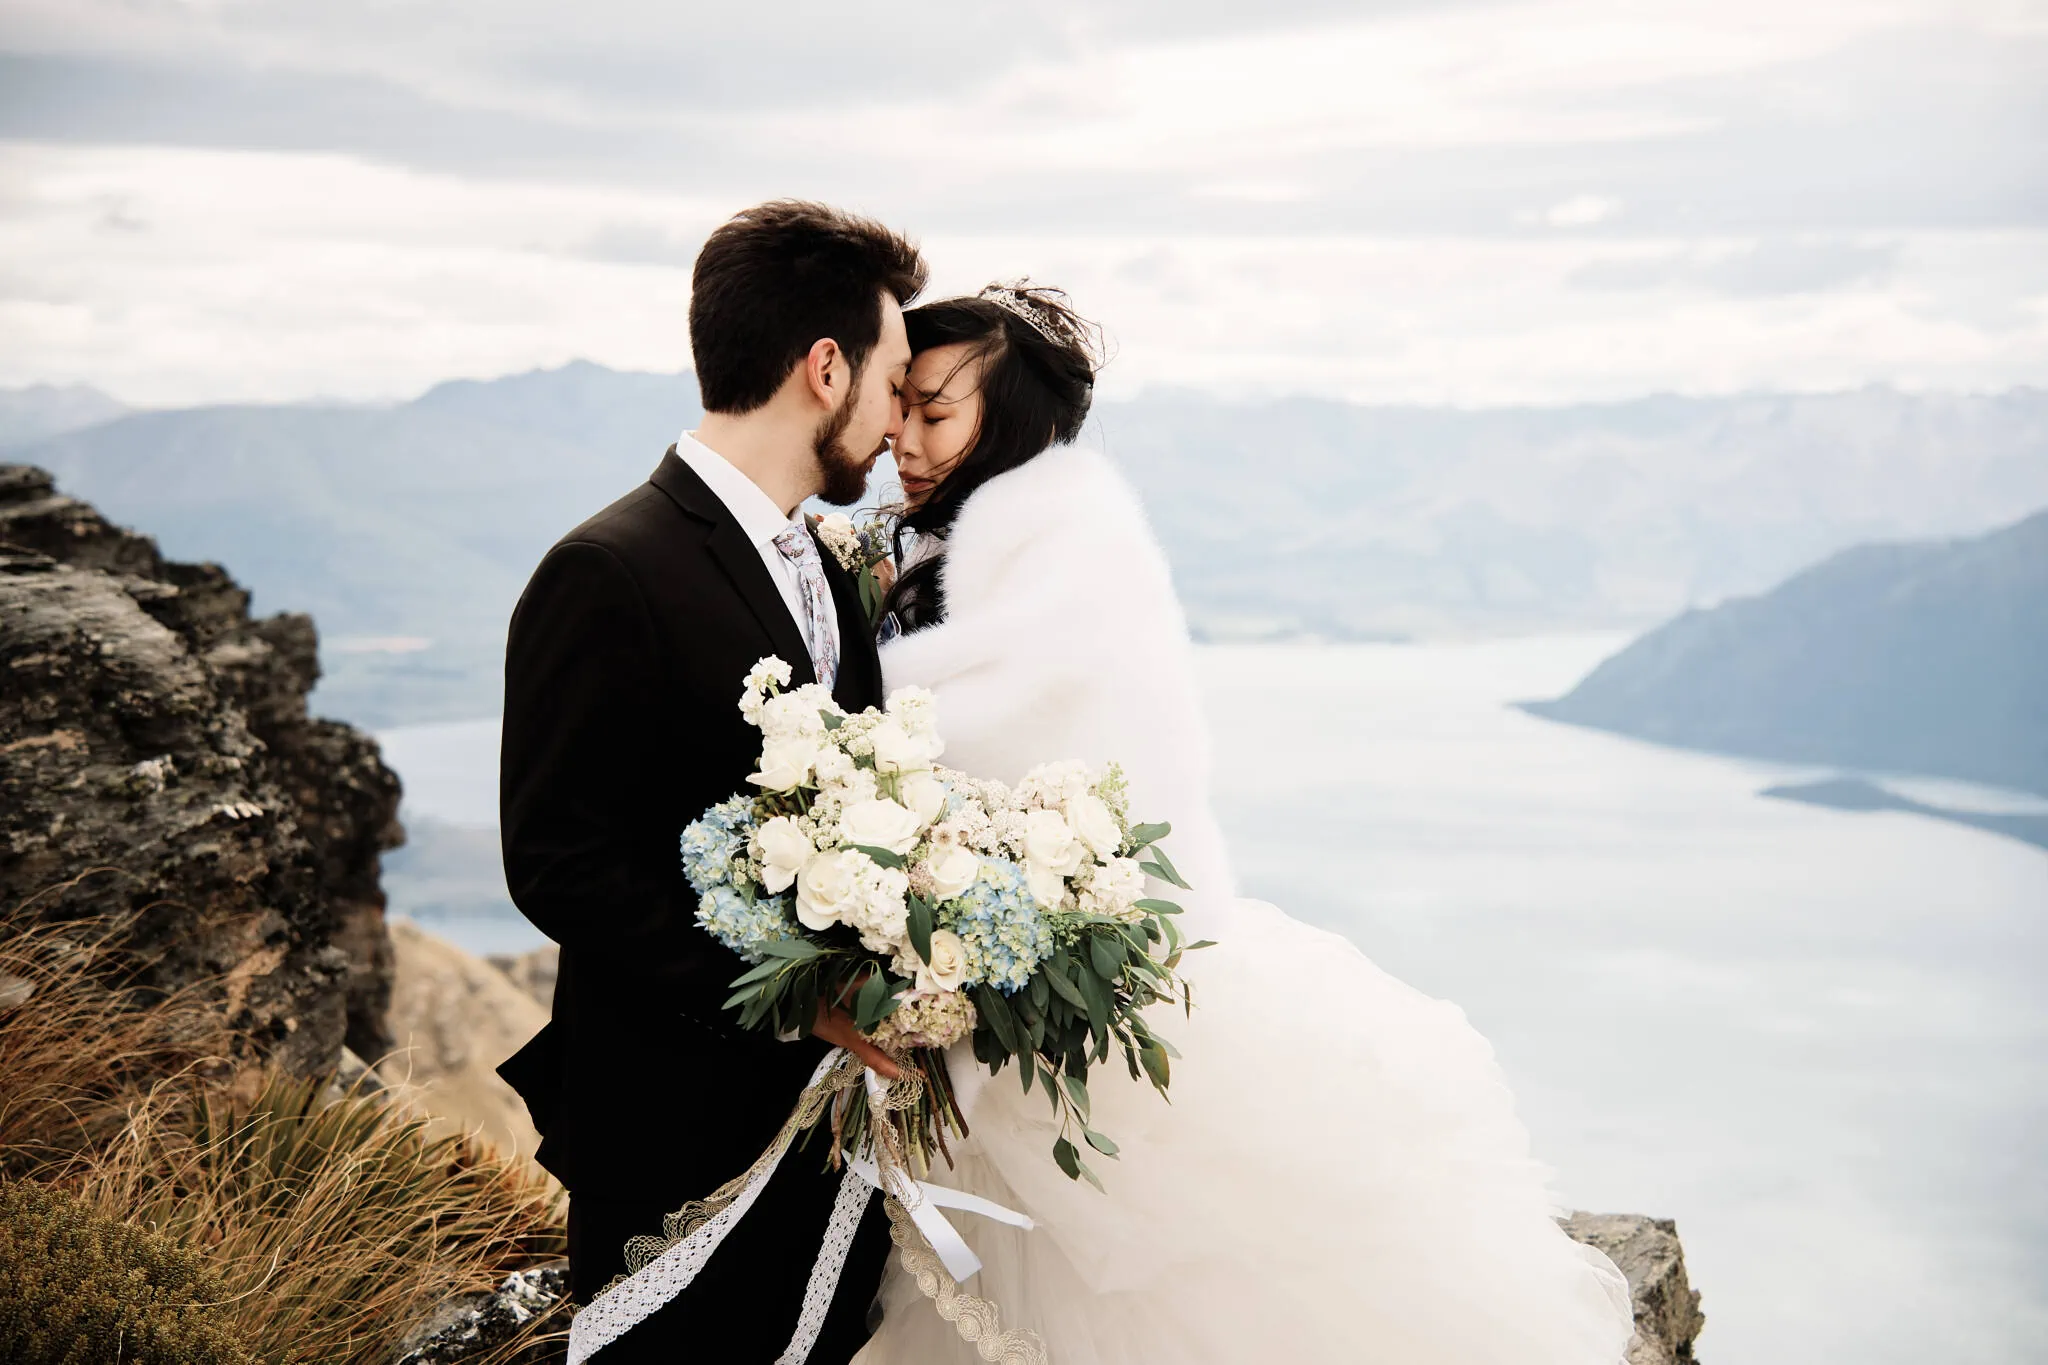 Carlos and Wanzhu celebrate an intimate heli elopement wedding atop Cecil Peak, sharing a kiss overlooking Lake Wanaka.